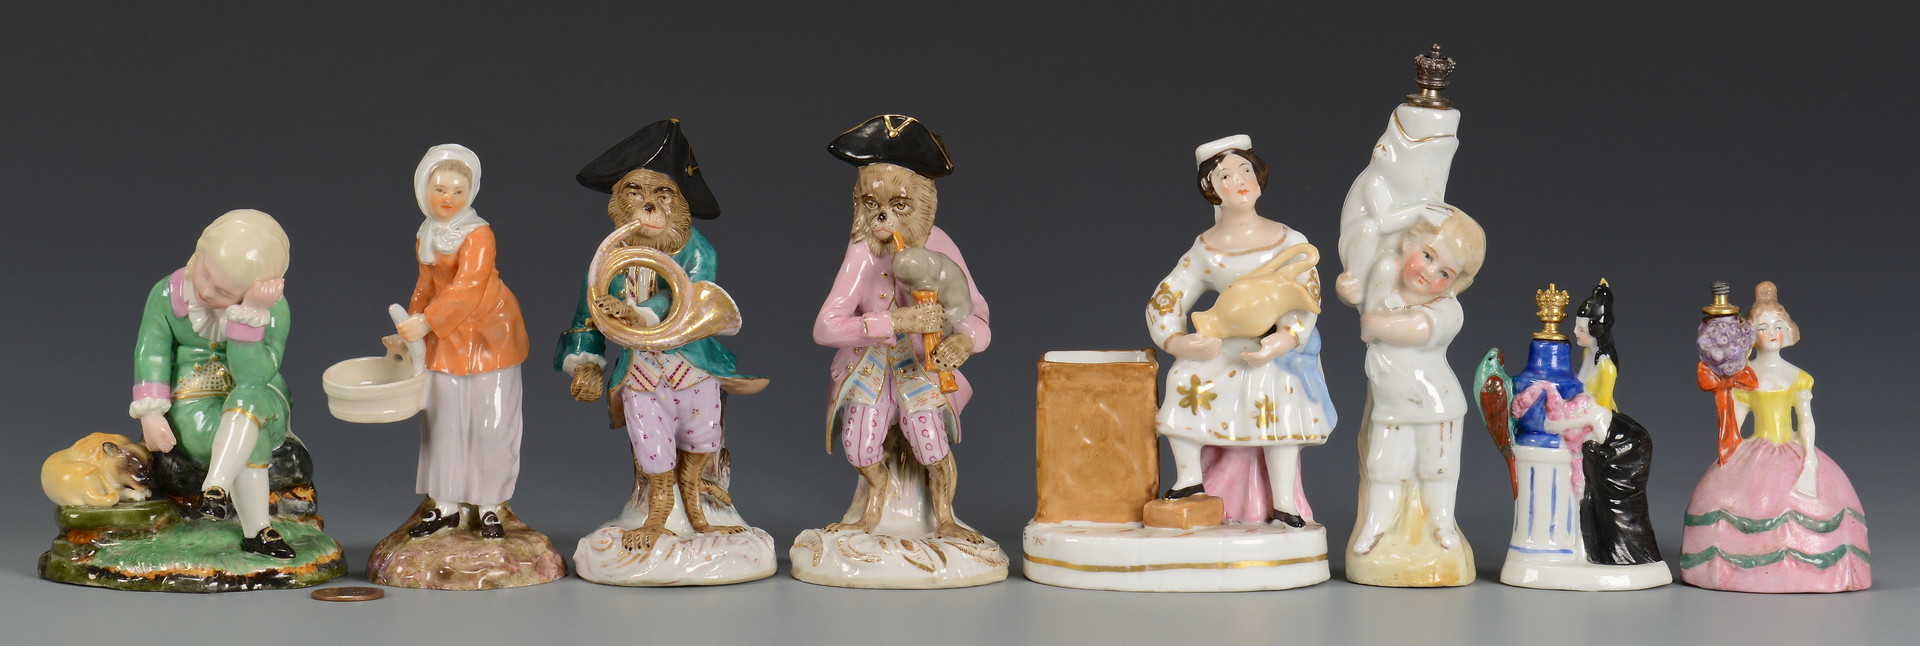 Lot 617: 8 Porcelain Figurines